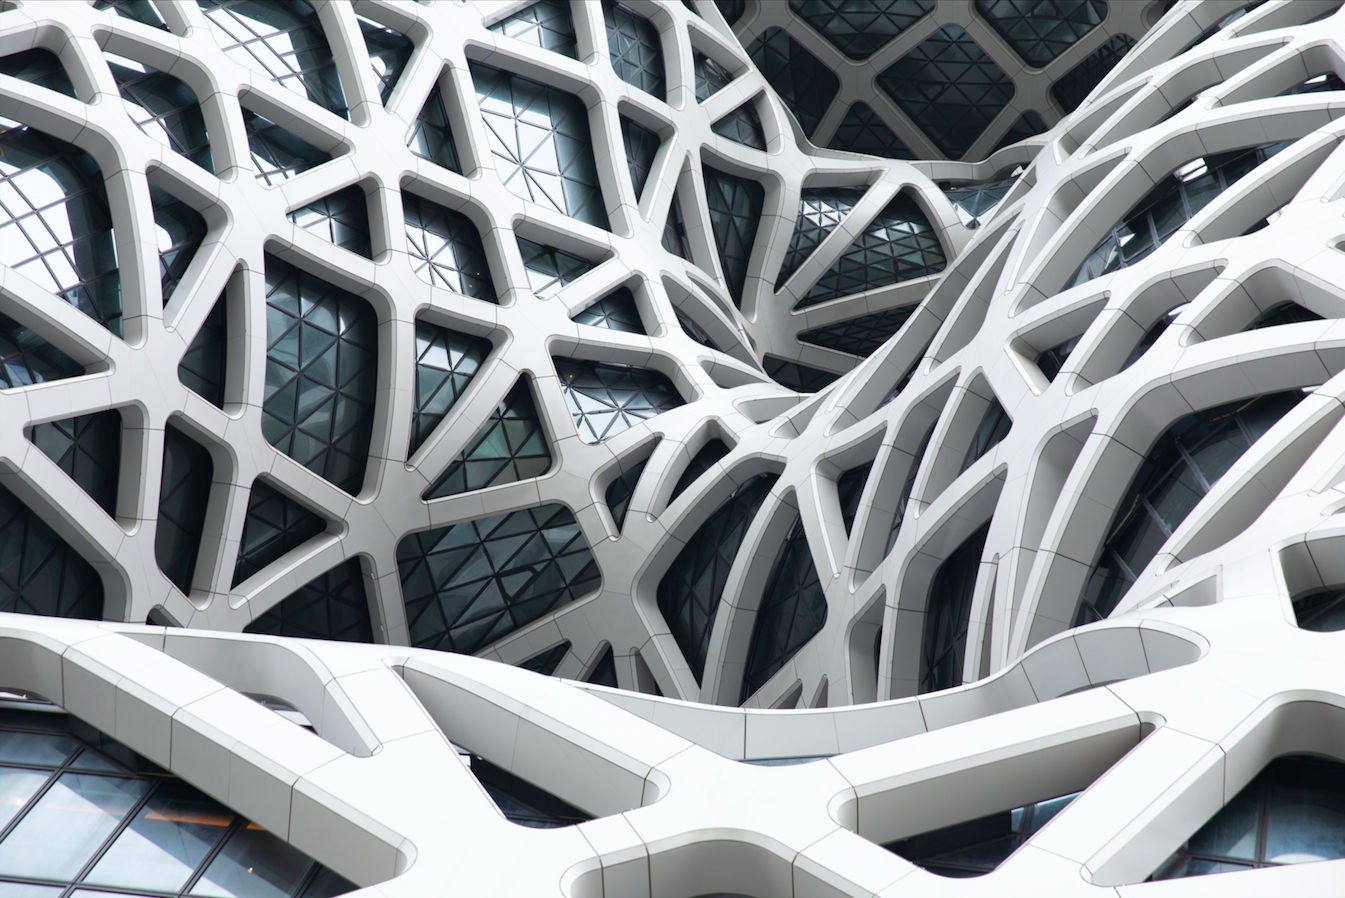 Morpheus Hotel by Zaha Hadid is Macau’s newest architectural gem